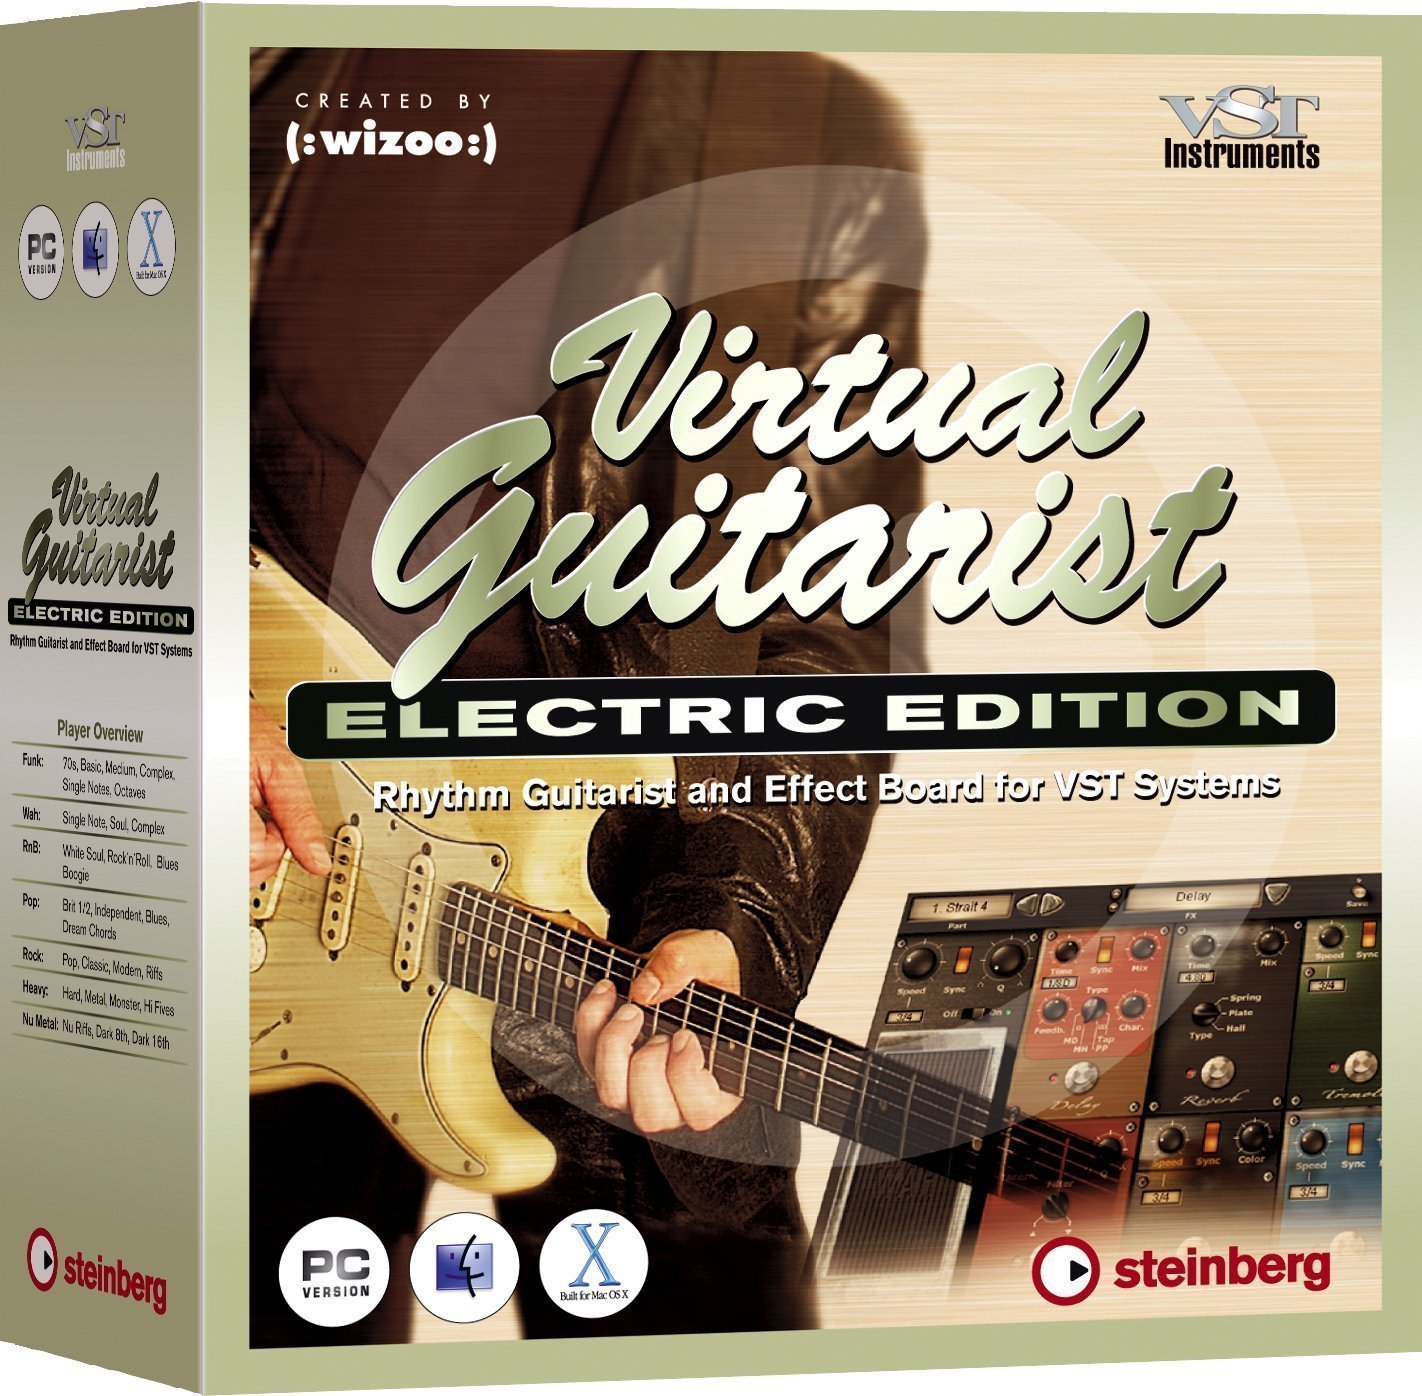 VST Instrument studio-software Steinberg Virtual Guitarist Electric Edition